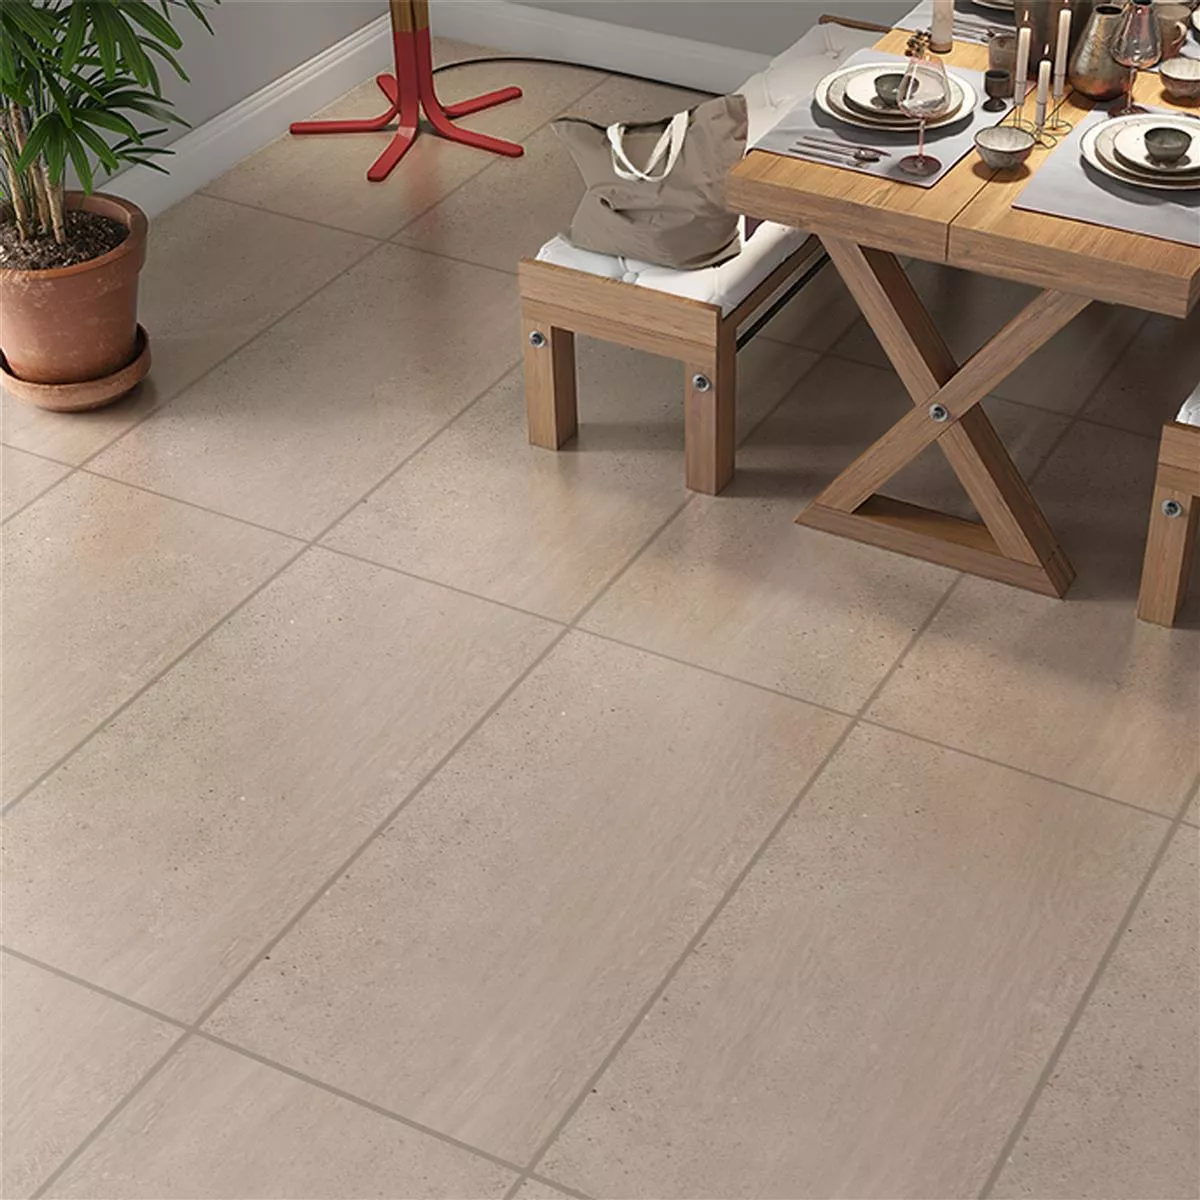 Sample Floor Tiles Darazo Wood Optic 30x60cm Beige